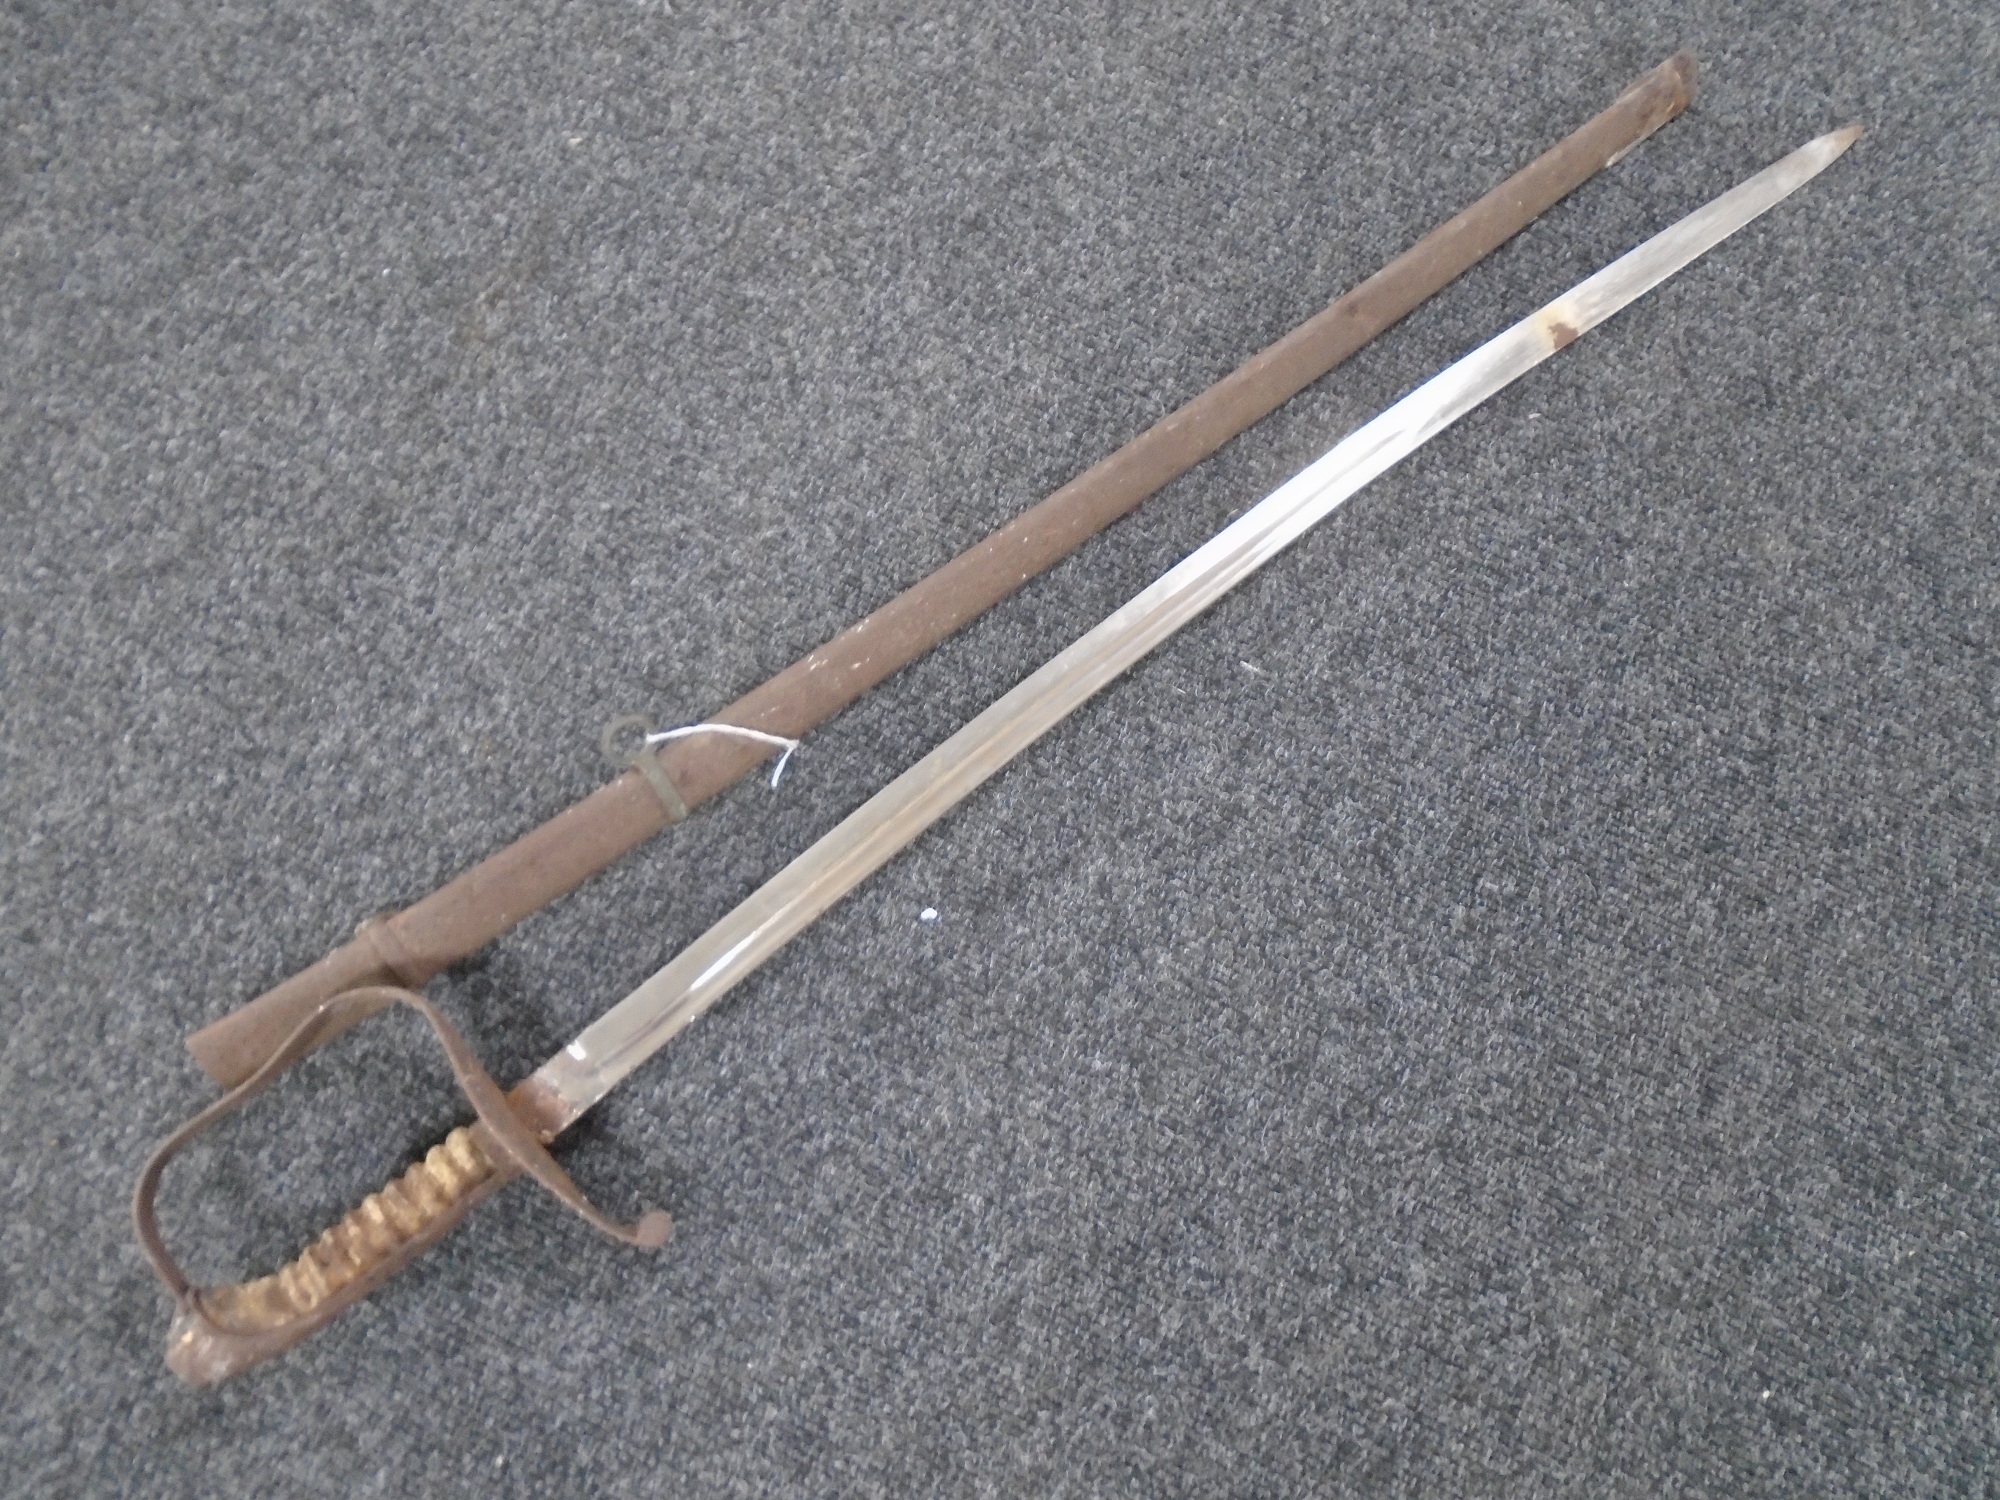 A 19th century naval sword in sheath.